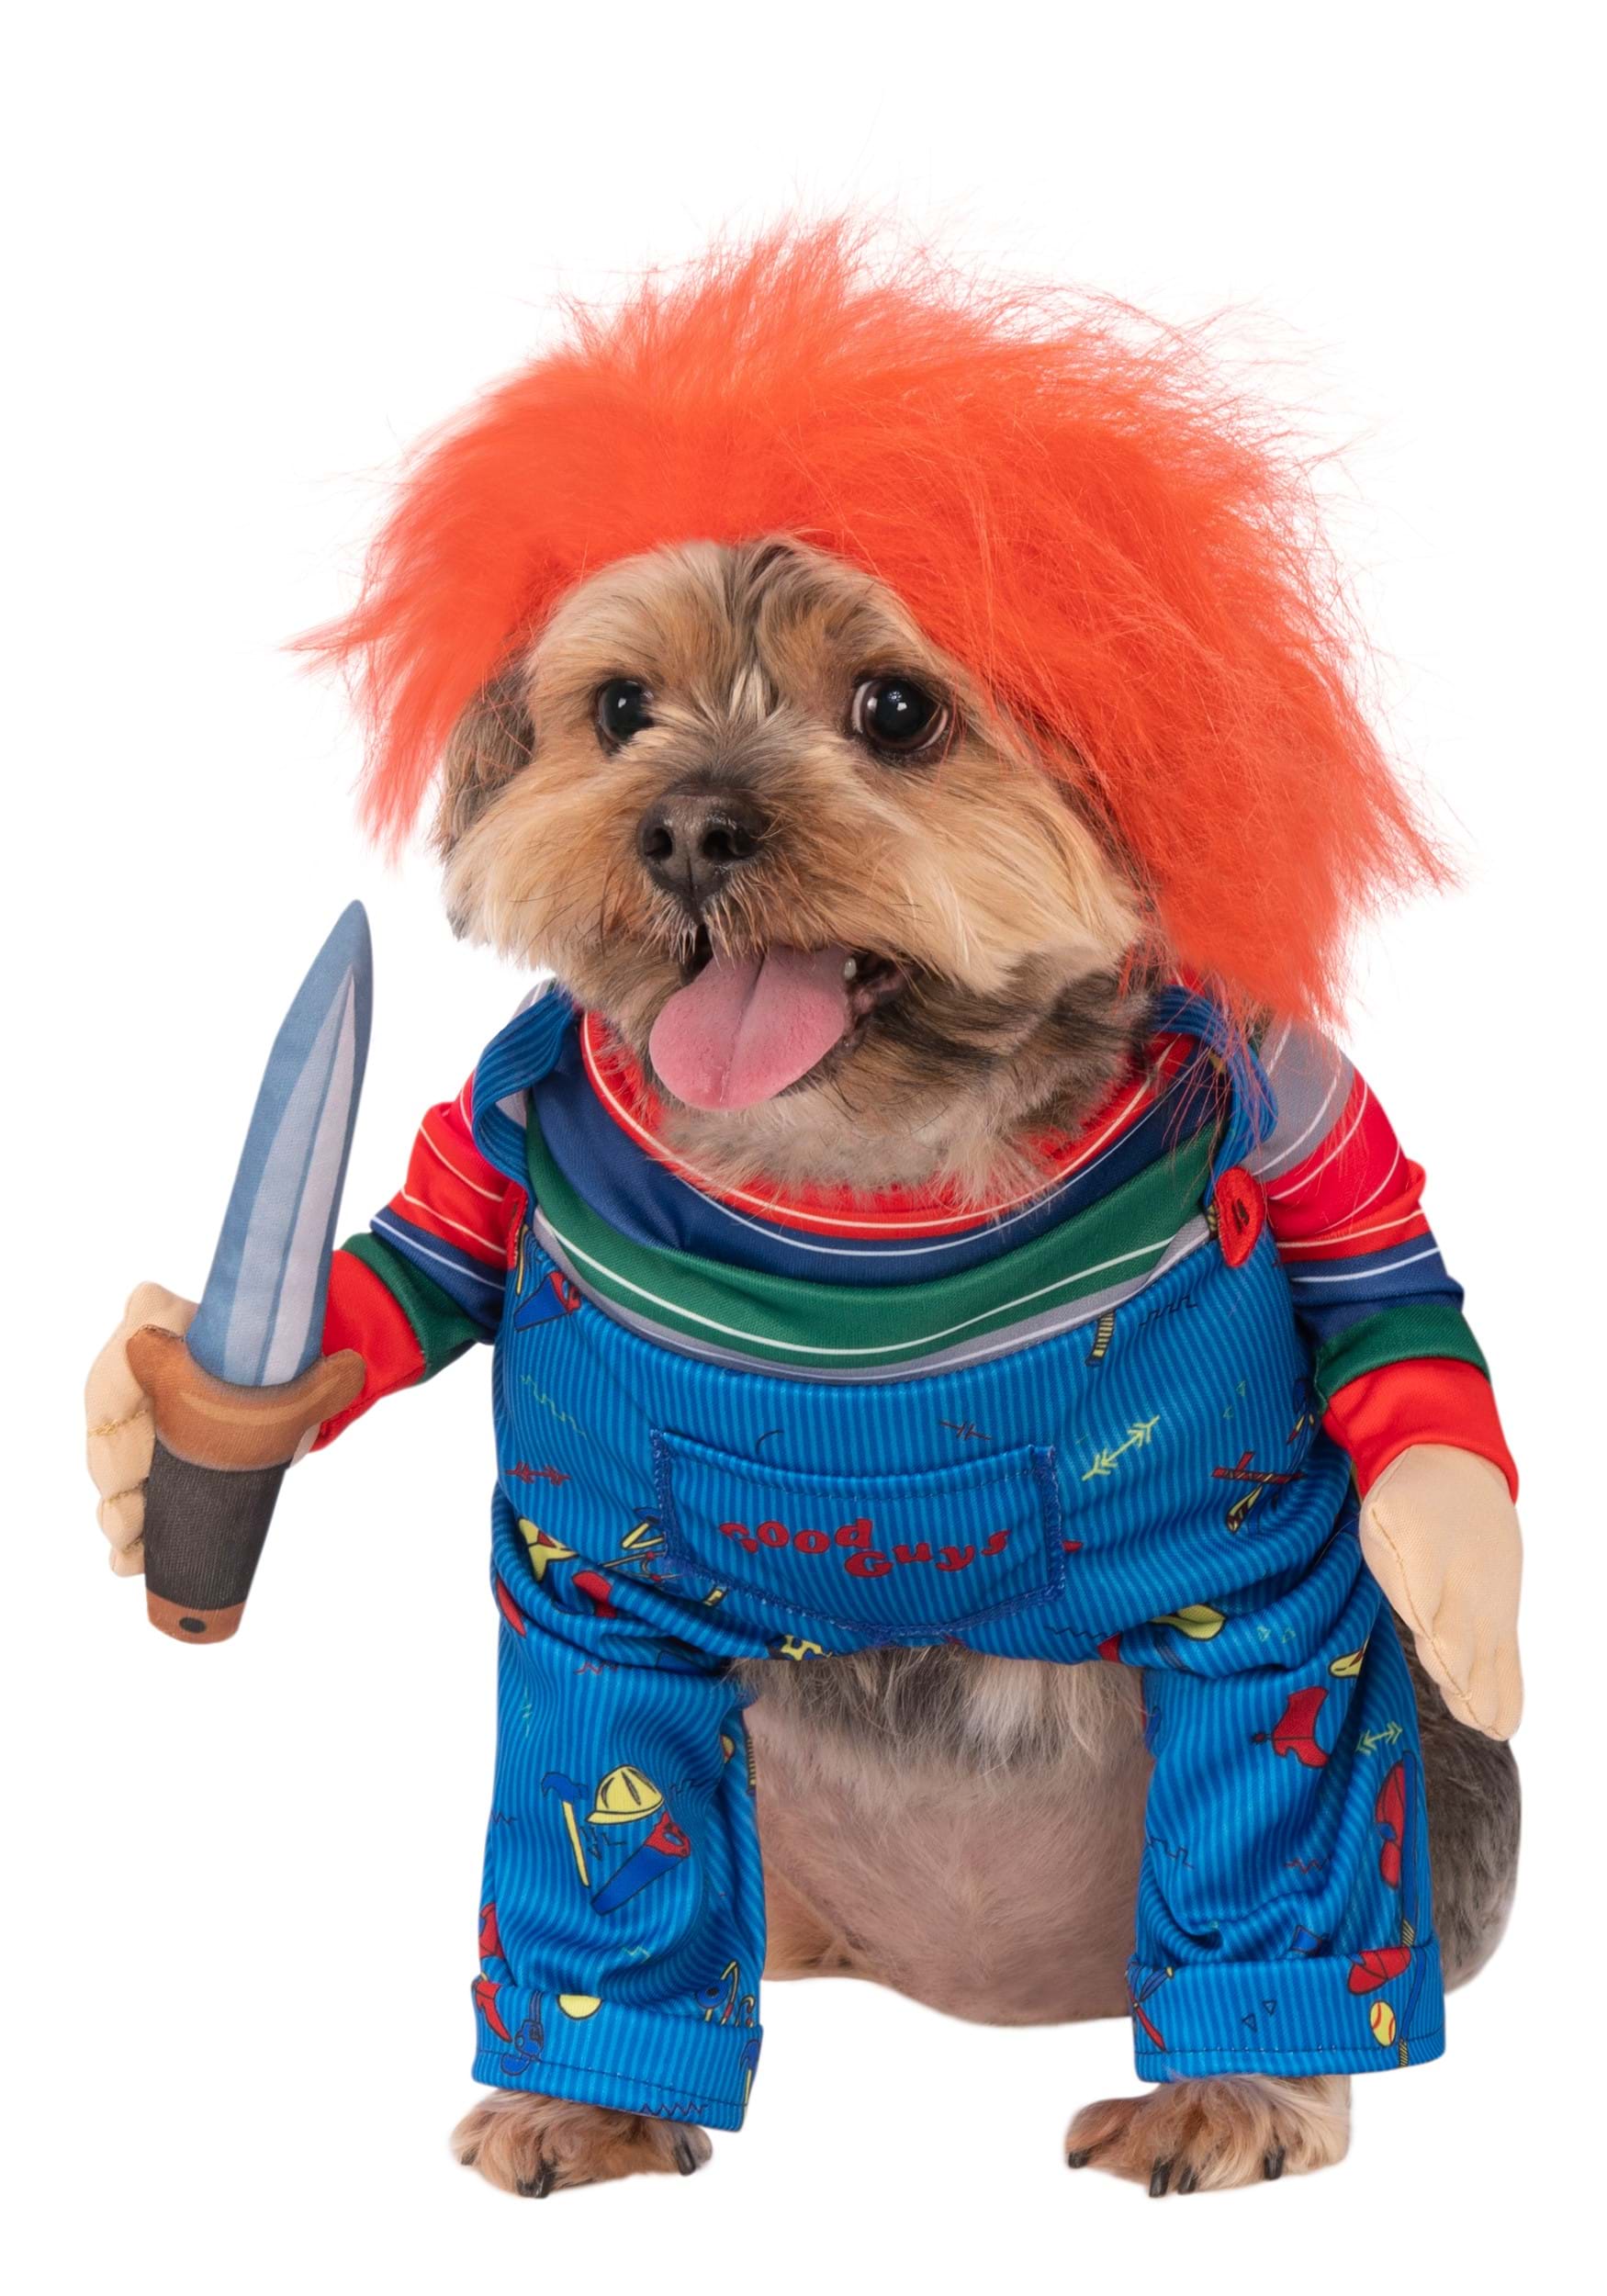 Udgående overskud Mispend Chucky Dog Halloween Costume